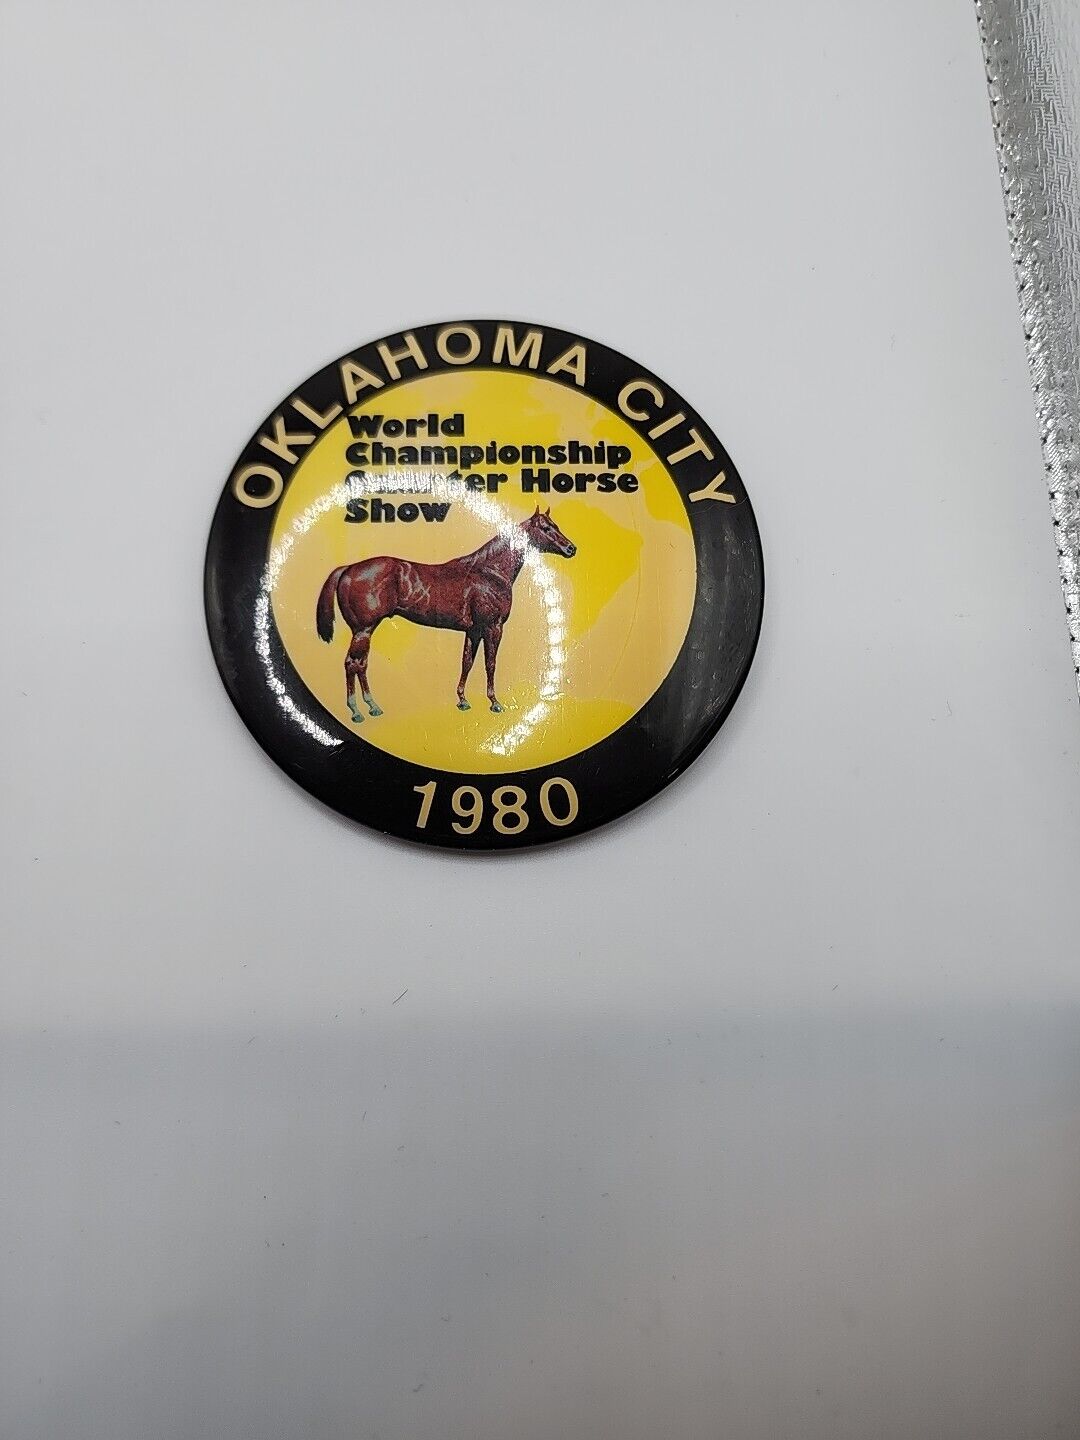 VTG 1980 World Championship Quarter Horse Show Button Pin Oklahoma City OK